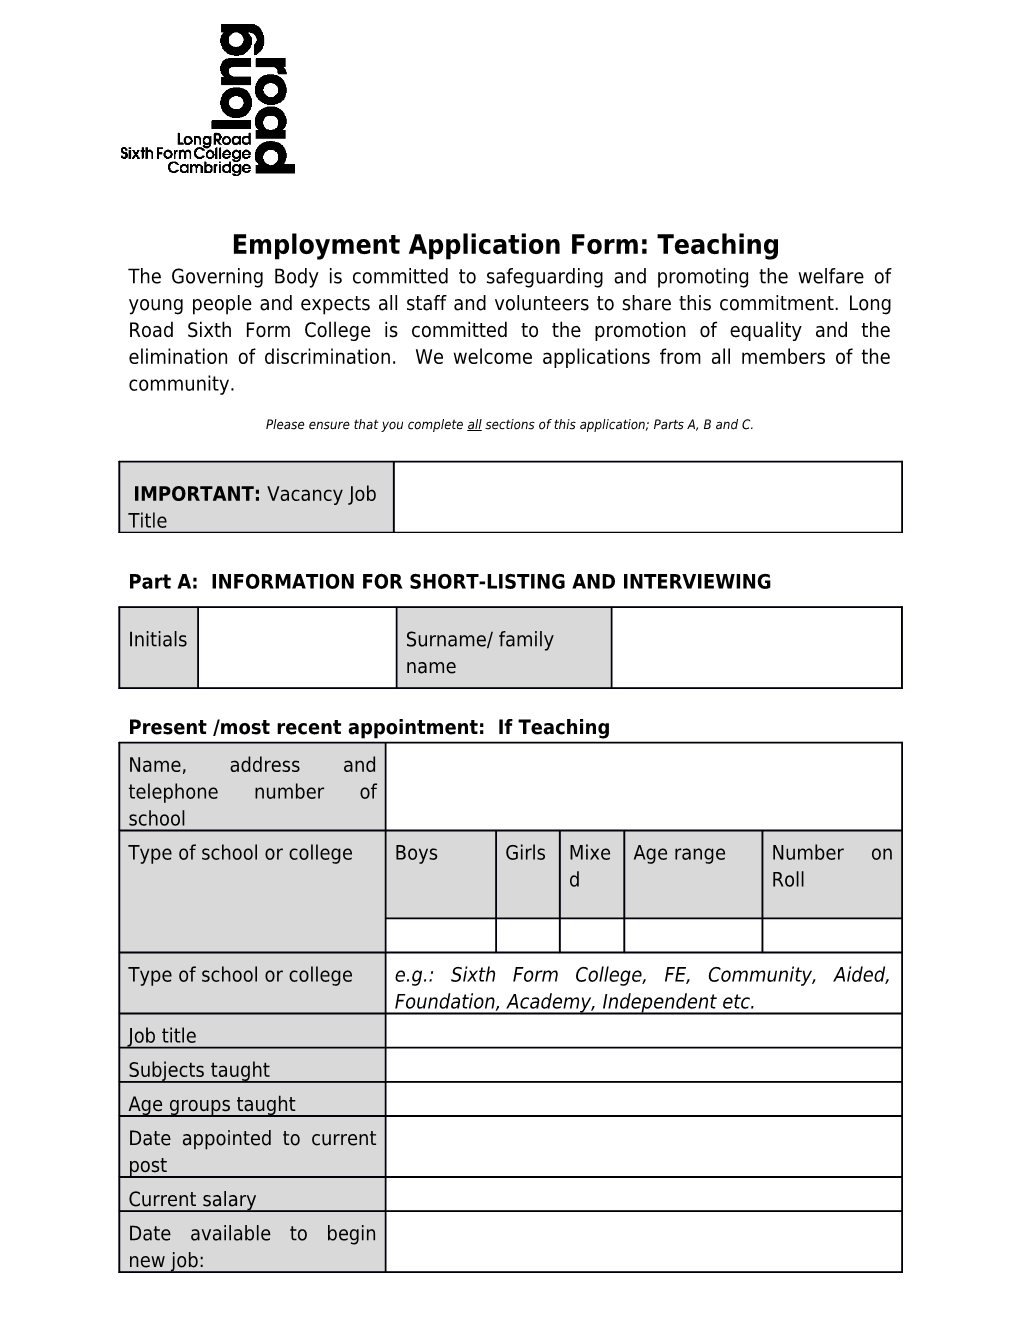 Employment Application Form: Teaching s1